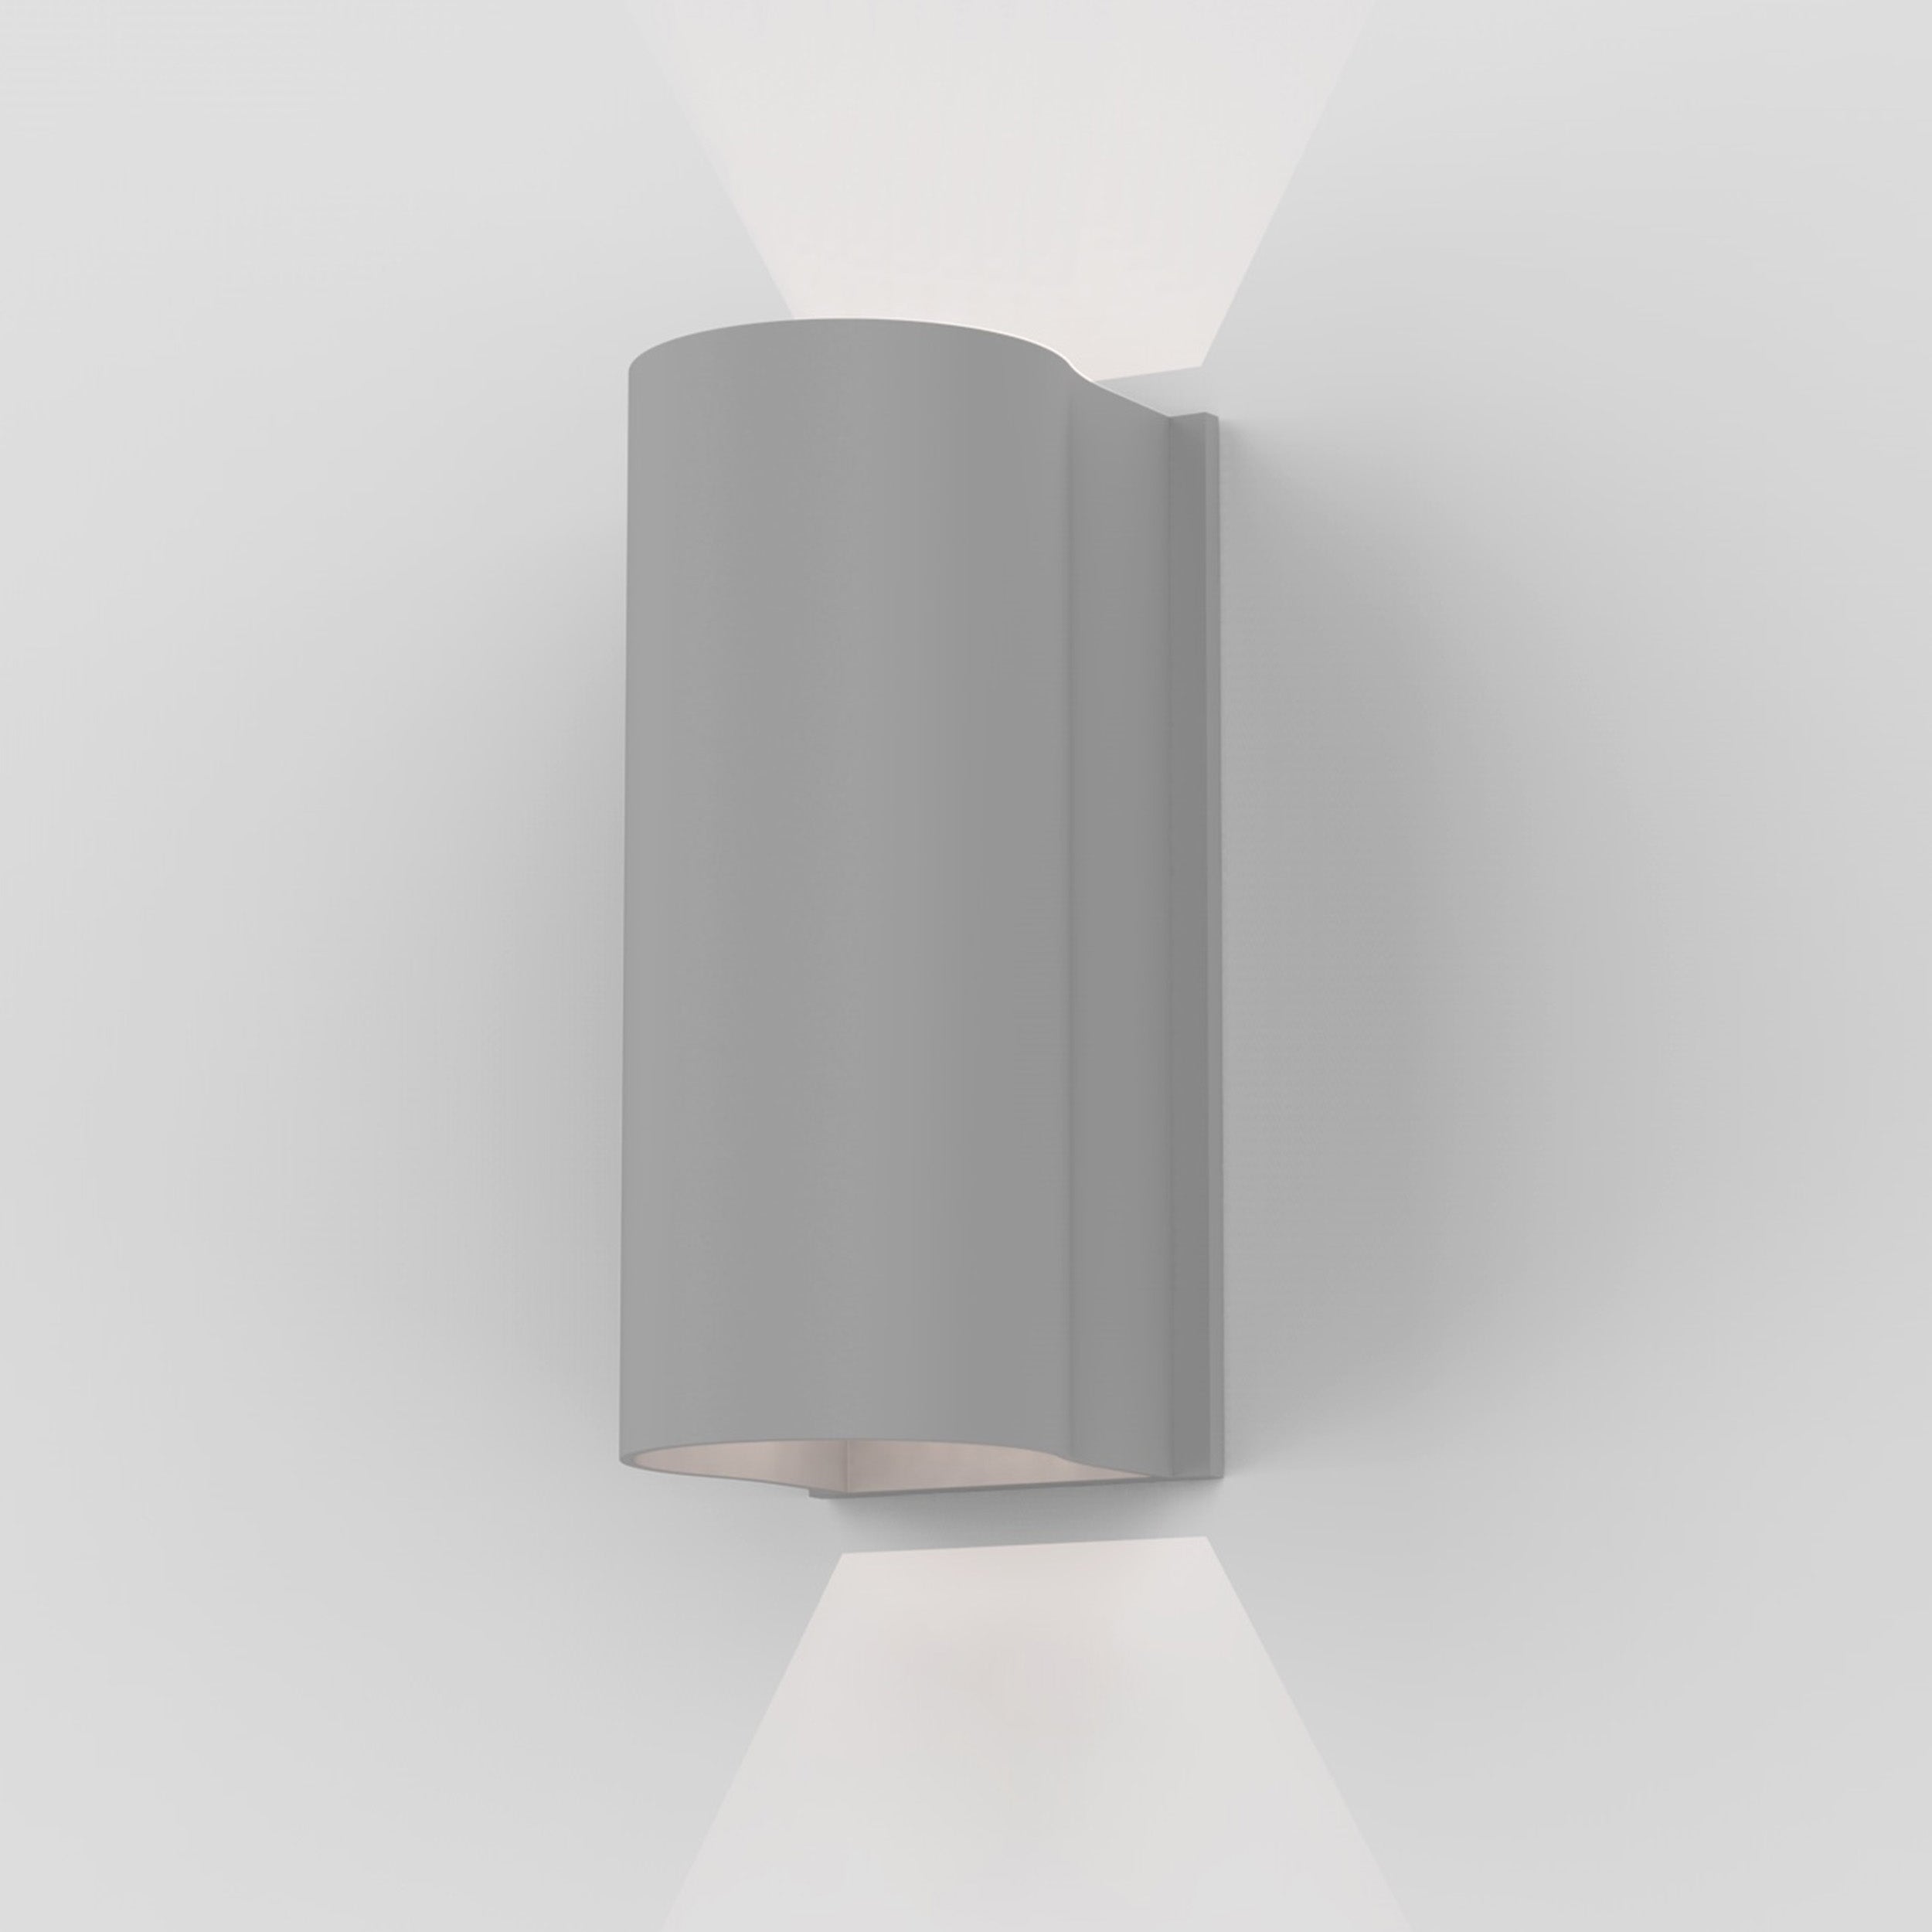 Astro Lighting Dunbar Wall Light Fixtures Astro Lighting 5.16x4.33x10.04 Textured Grey Yes (Integral), COB LED